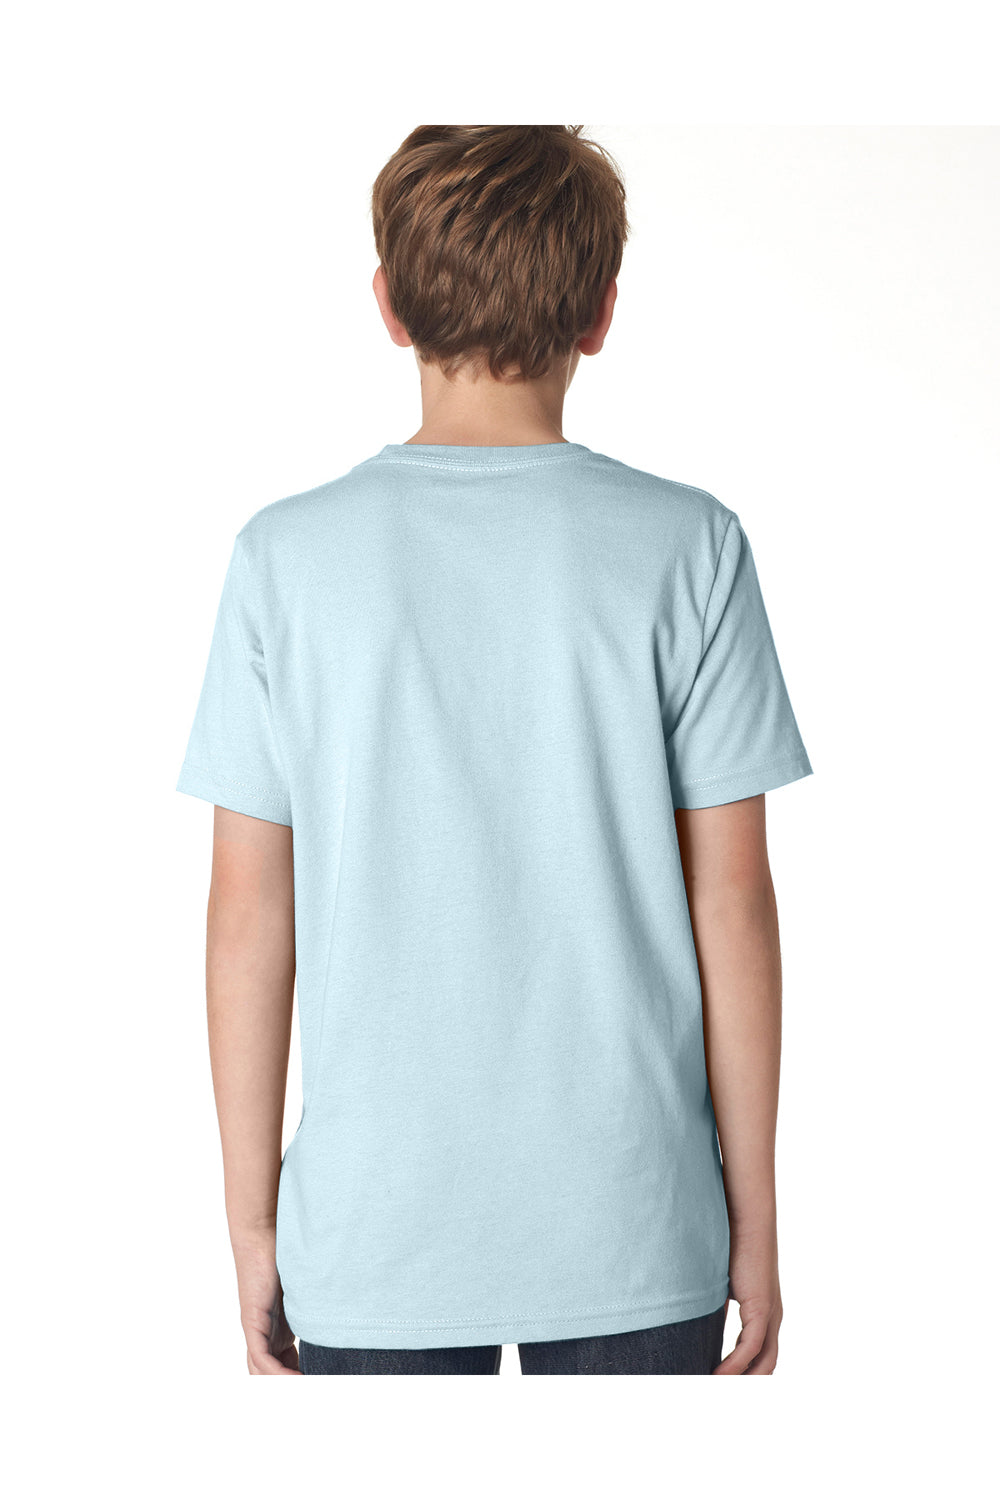 Next Level 3310 Youth Fine Jersey Short Sleeve Crewneck T-Shirt Light Blue Back